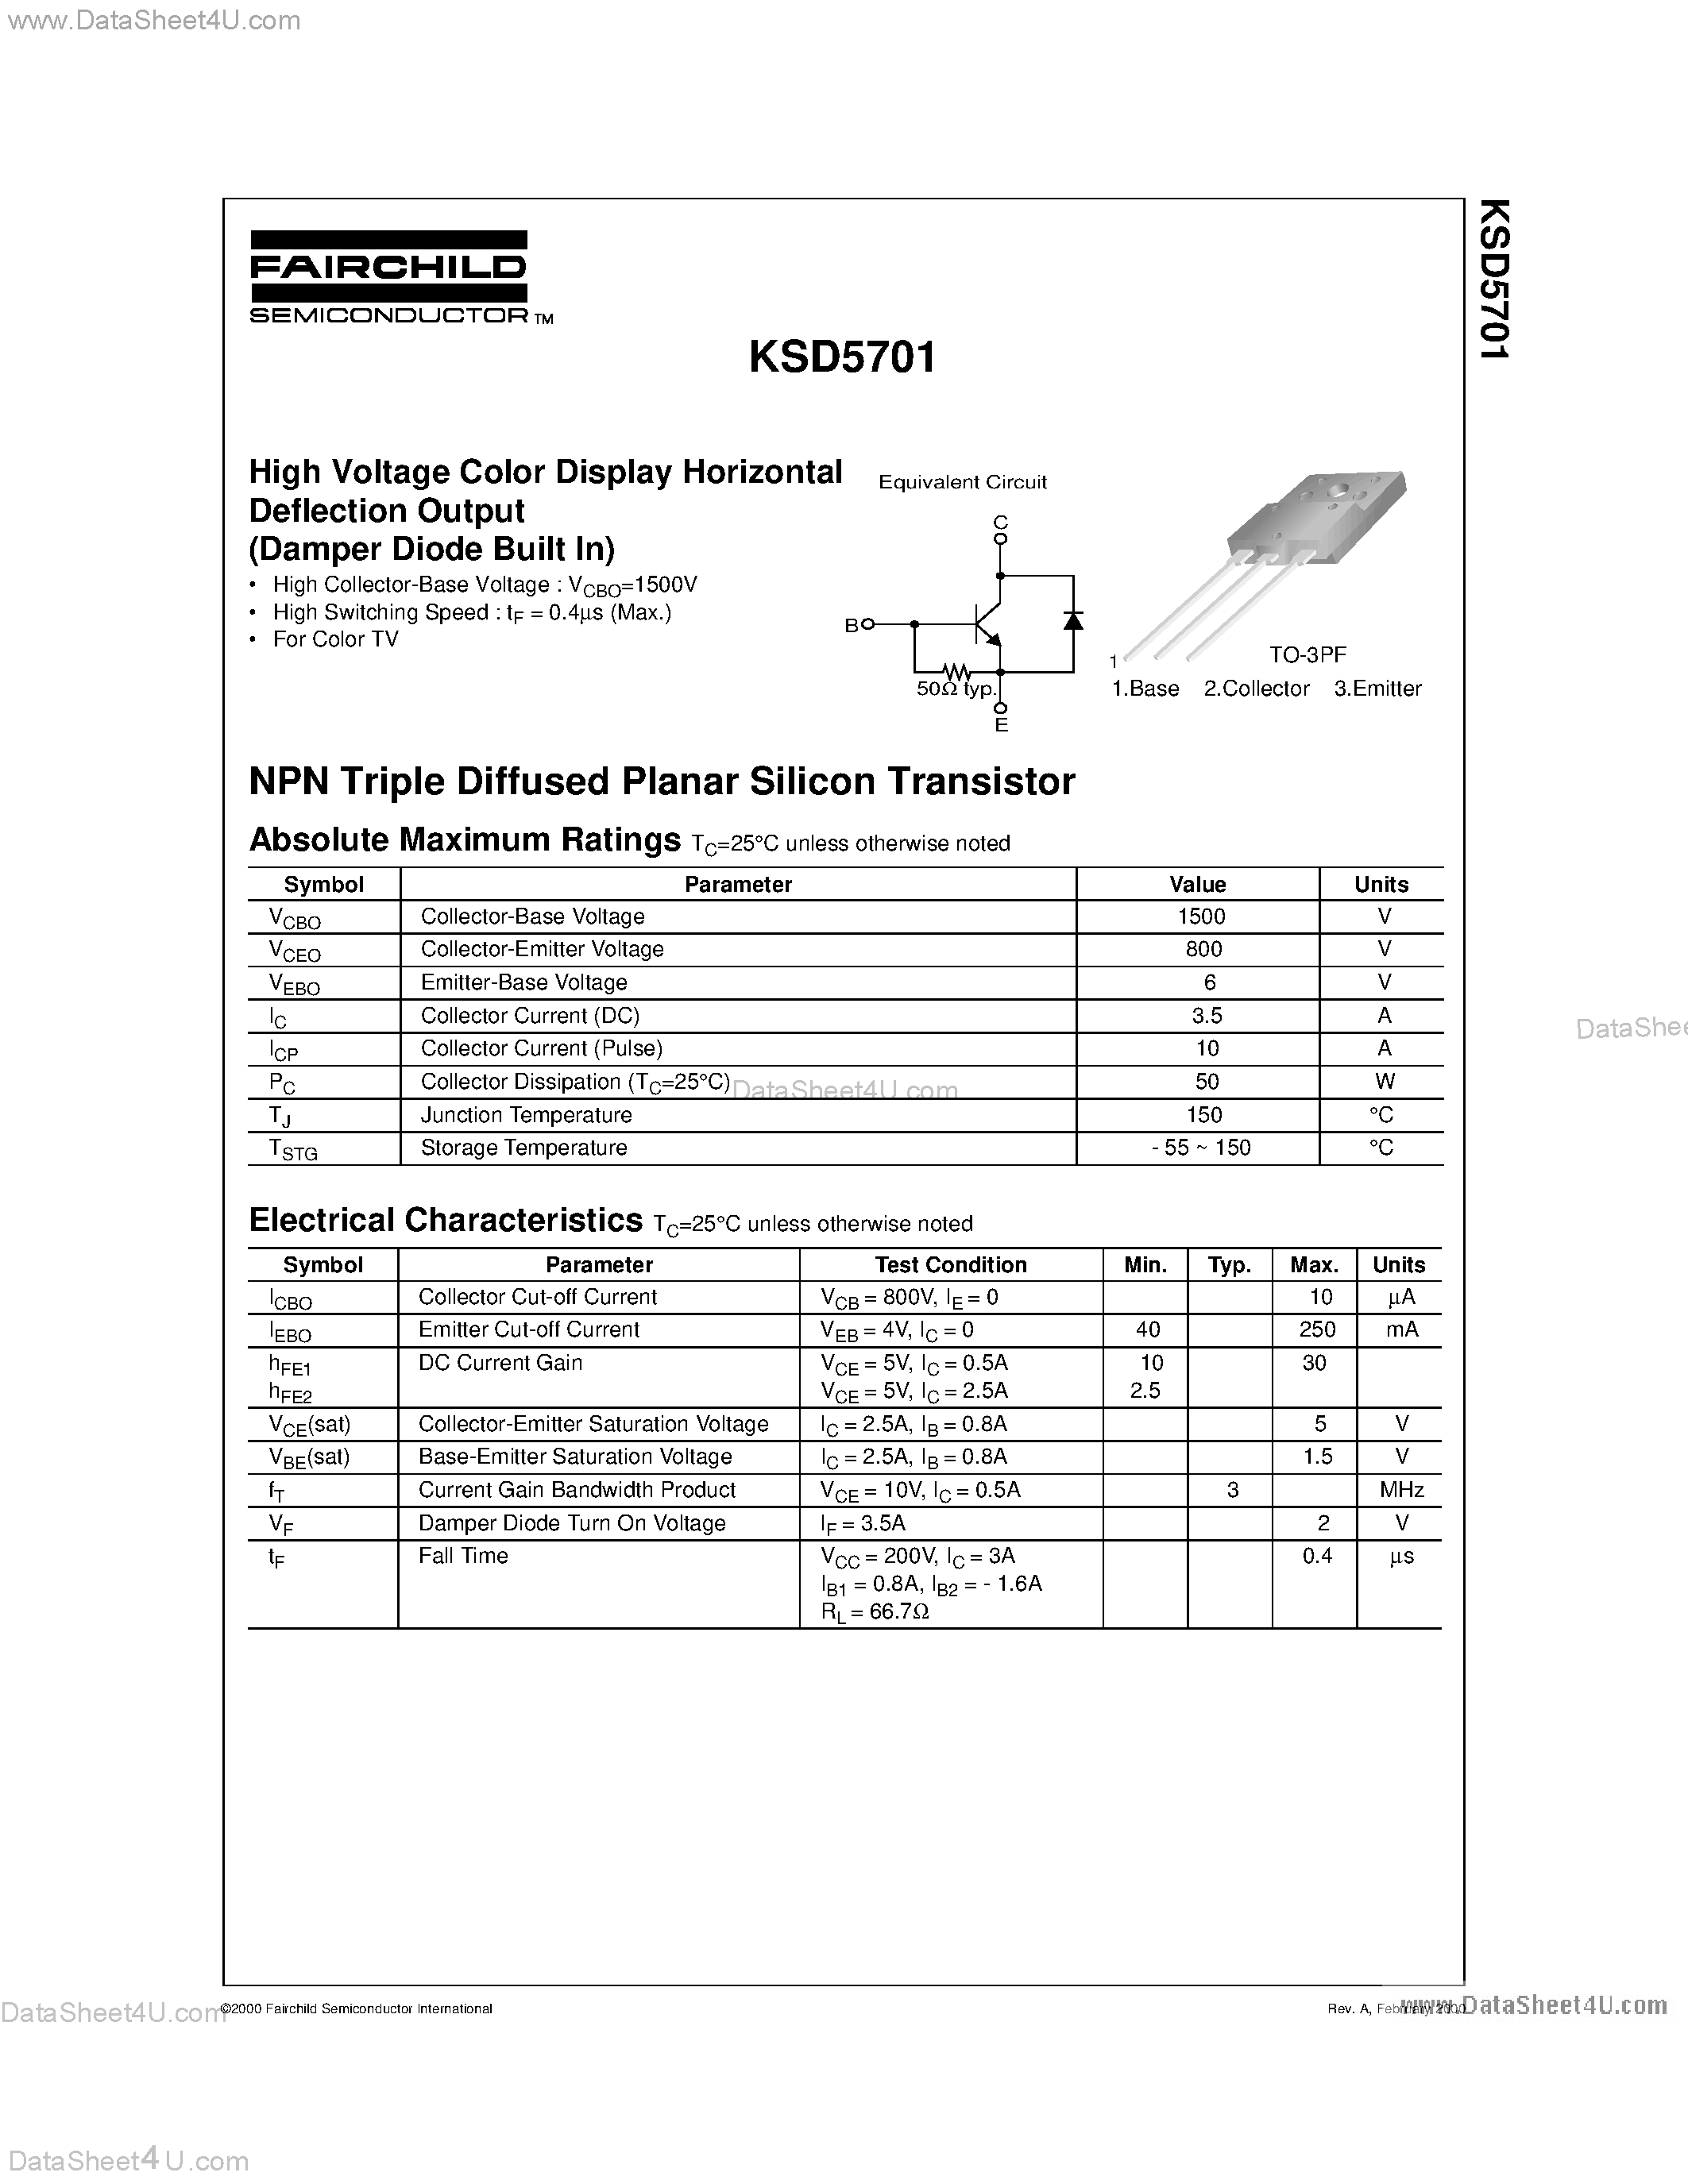 Даташит KSD5701 - High Voltage Color Display Horizontal Deflection Output страница 1